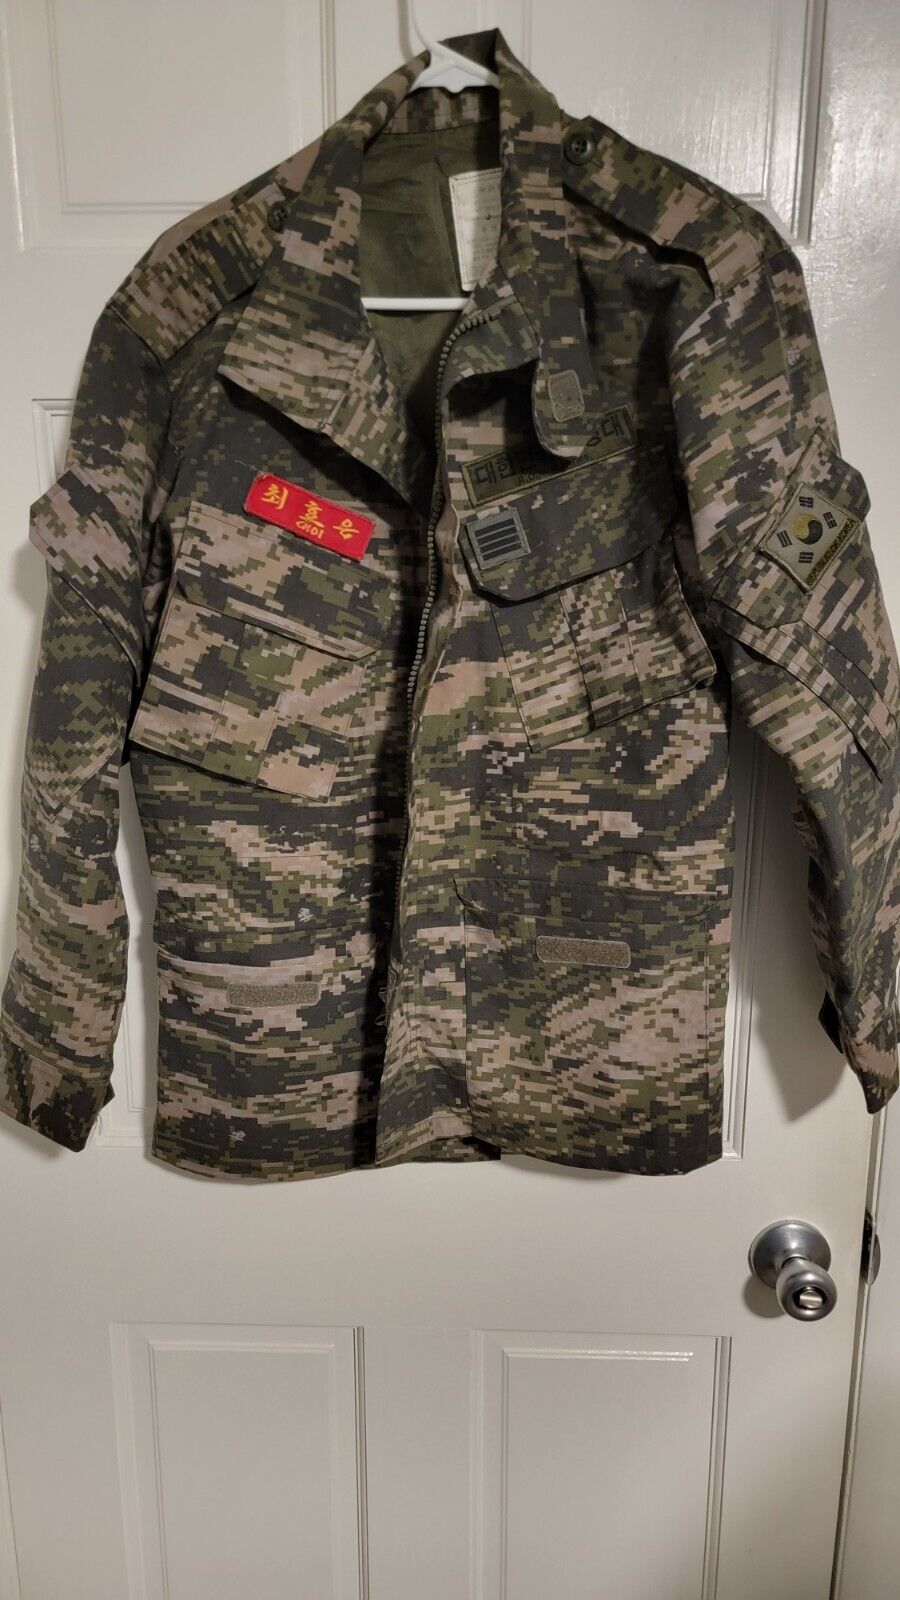 Korean ROK Marine Corps Field Jacket